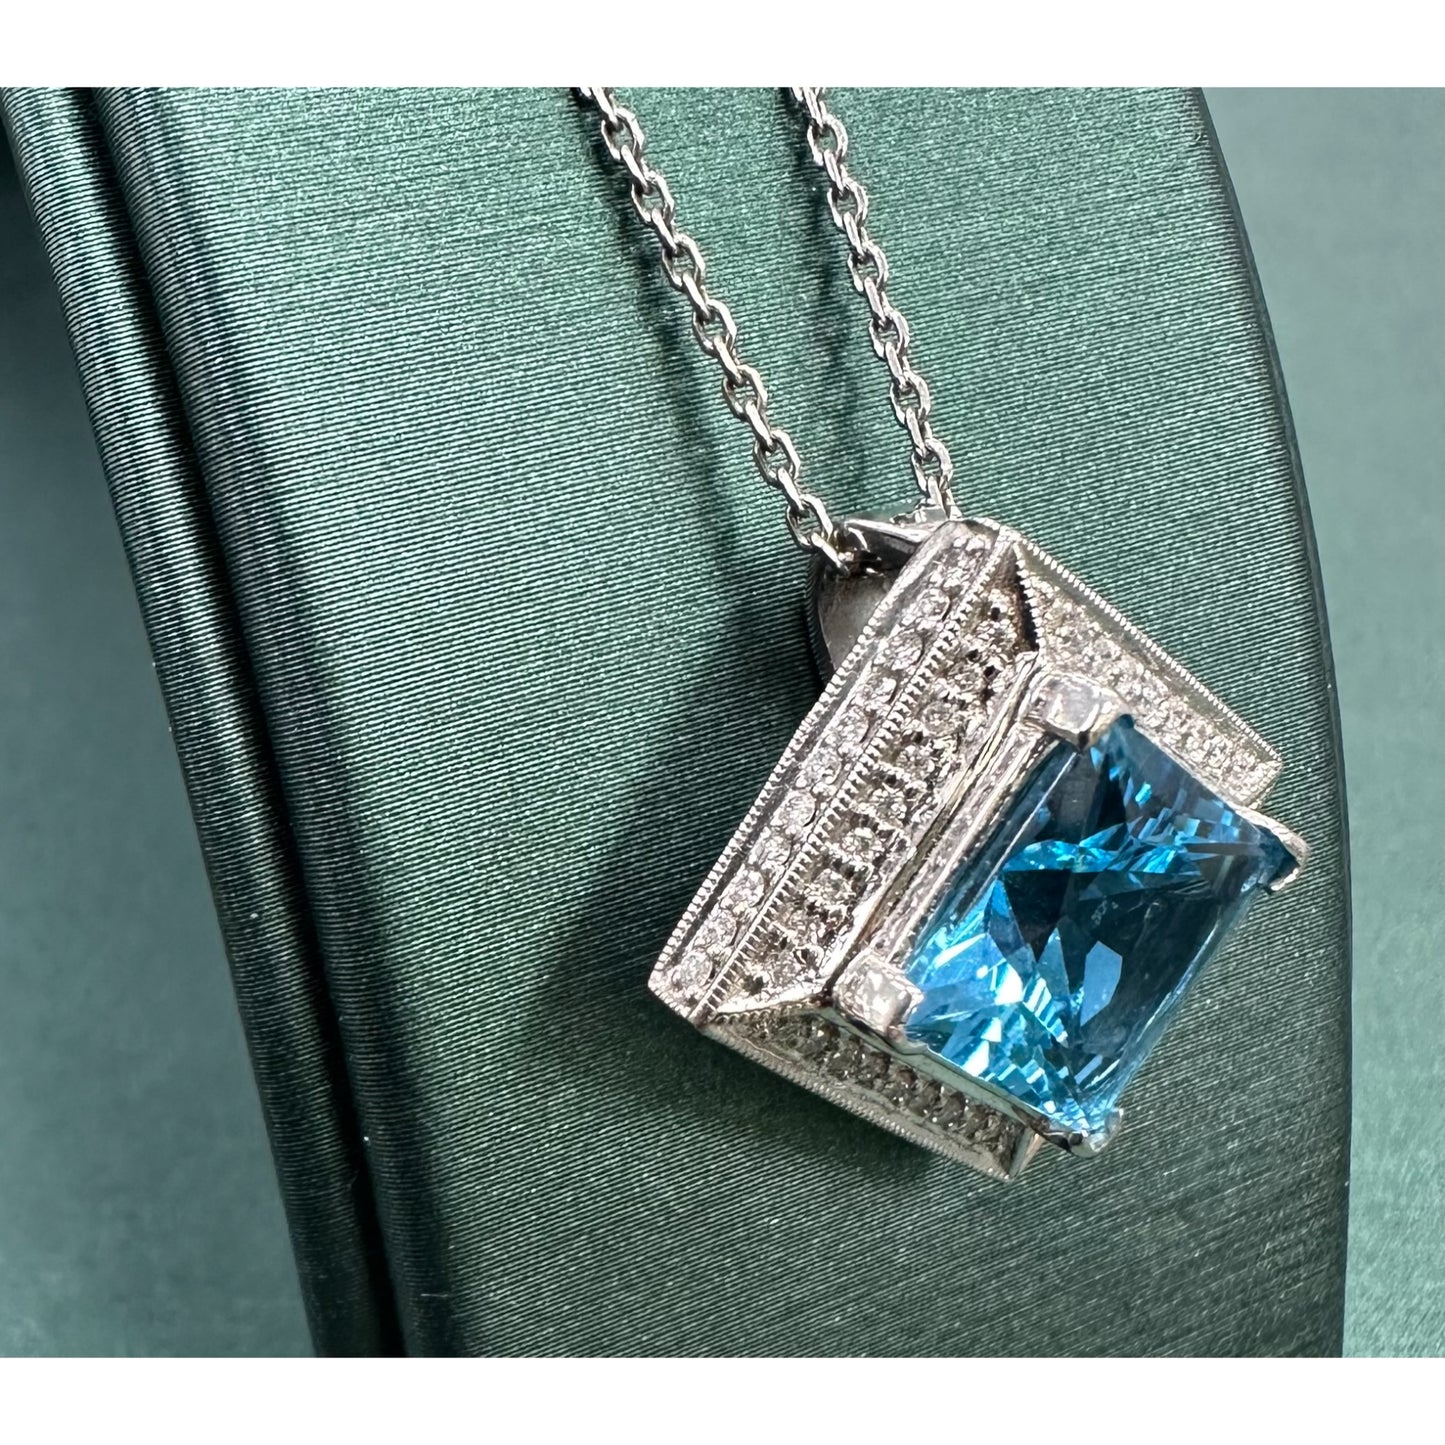 Princess cut Swiss blue topaz diamond halo necklace